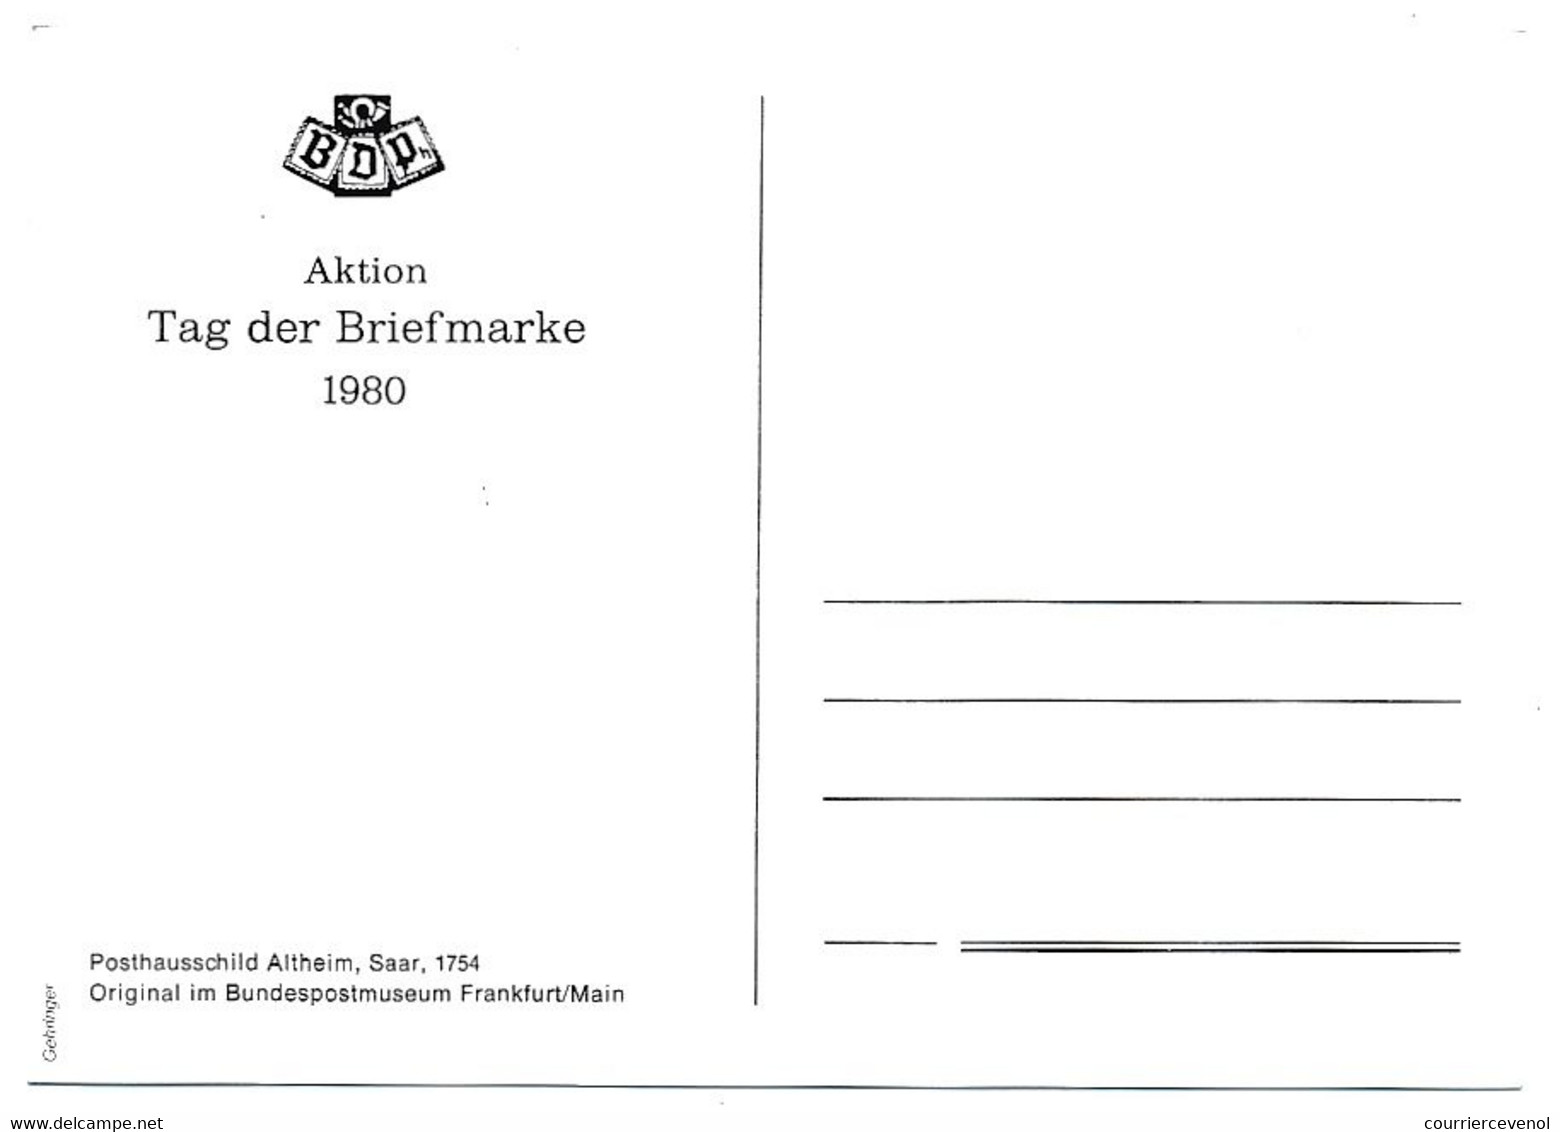 ALLEMAGNE - 4 Cartes Maximum - FIP Kongress Essen - 1980 - Other & Unclassified